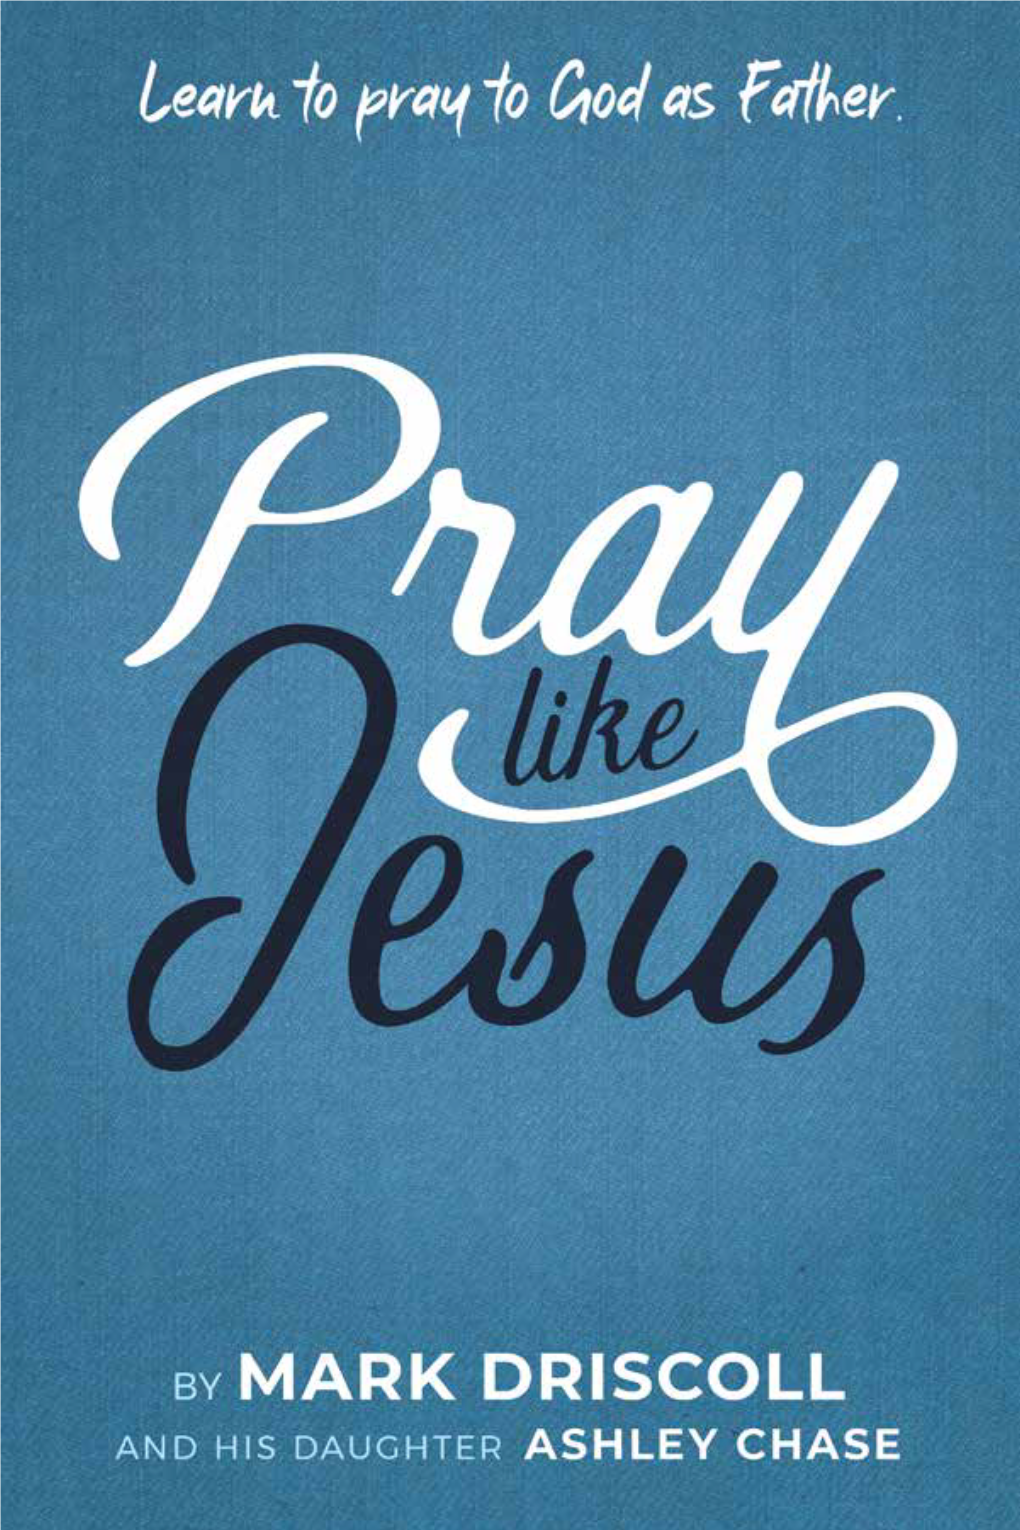 Jesus' Secret to Prayer